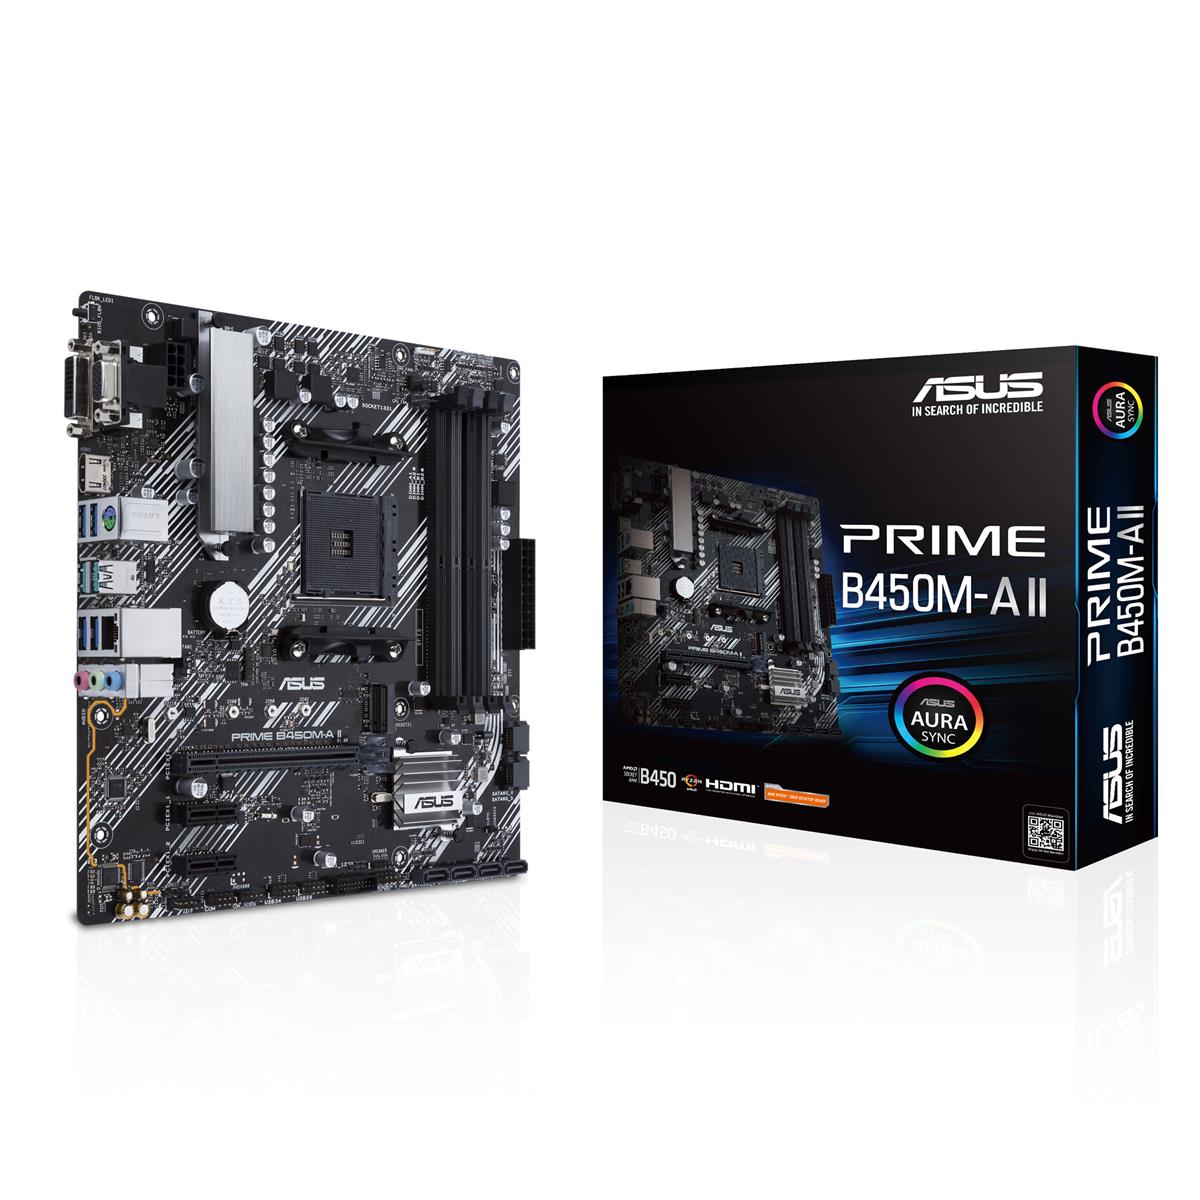 Image of ASUS Prime B450M-A II AMD Socket AM4 microATX Motherboard